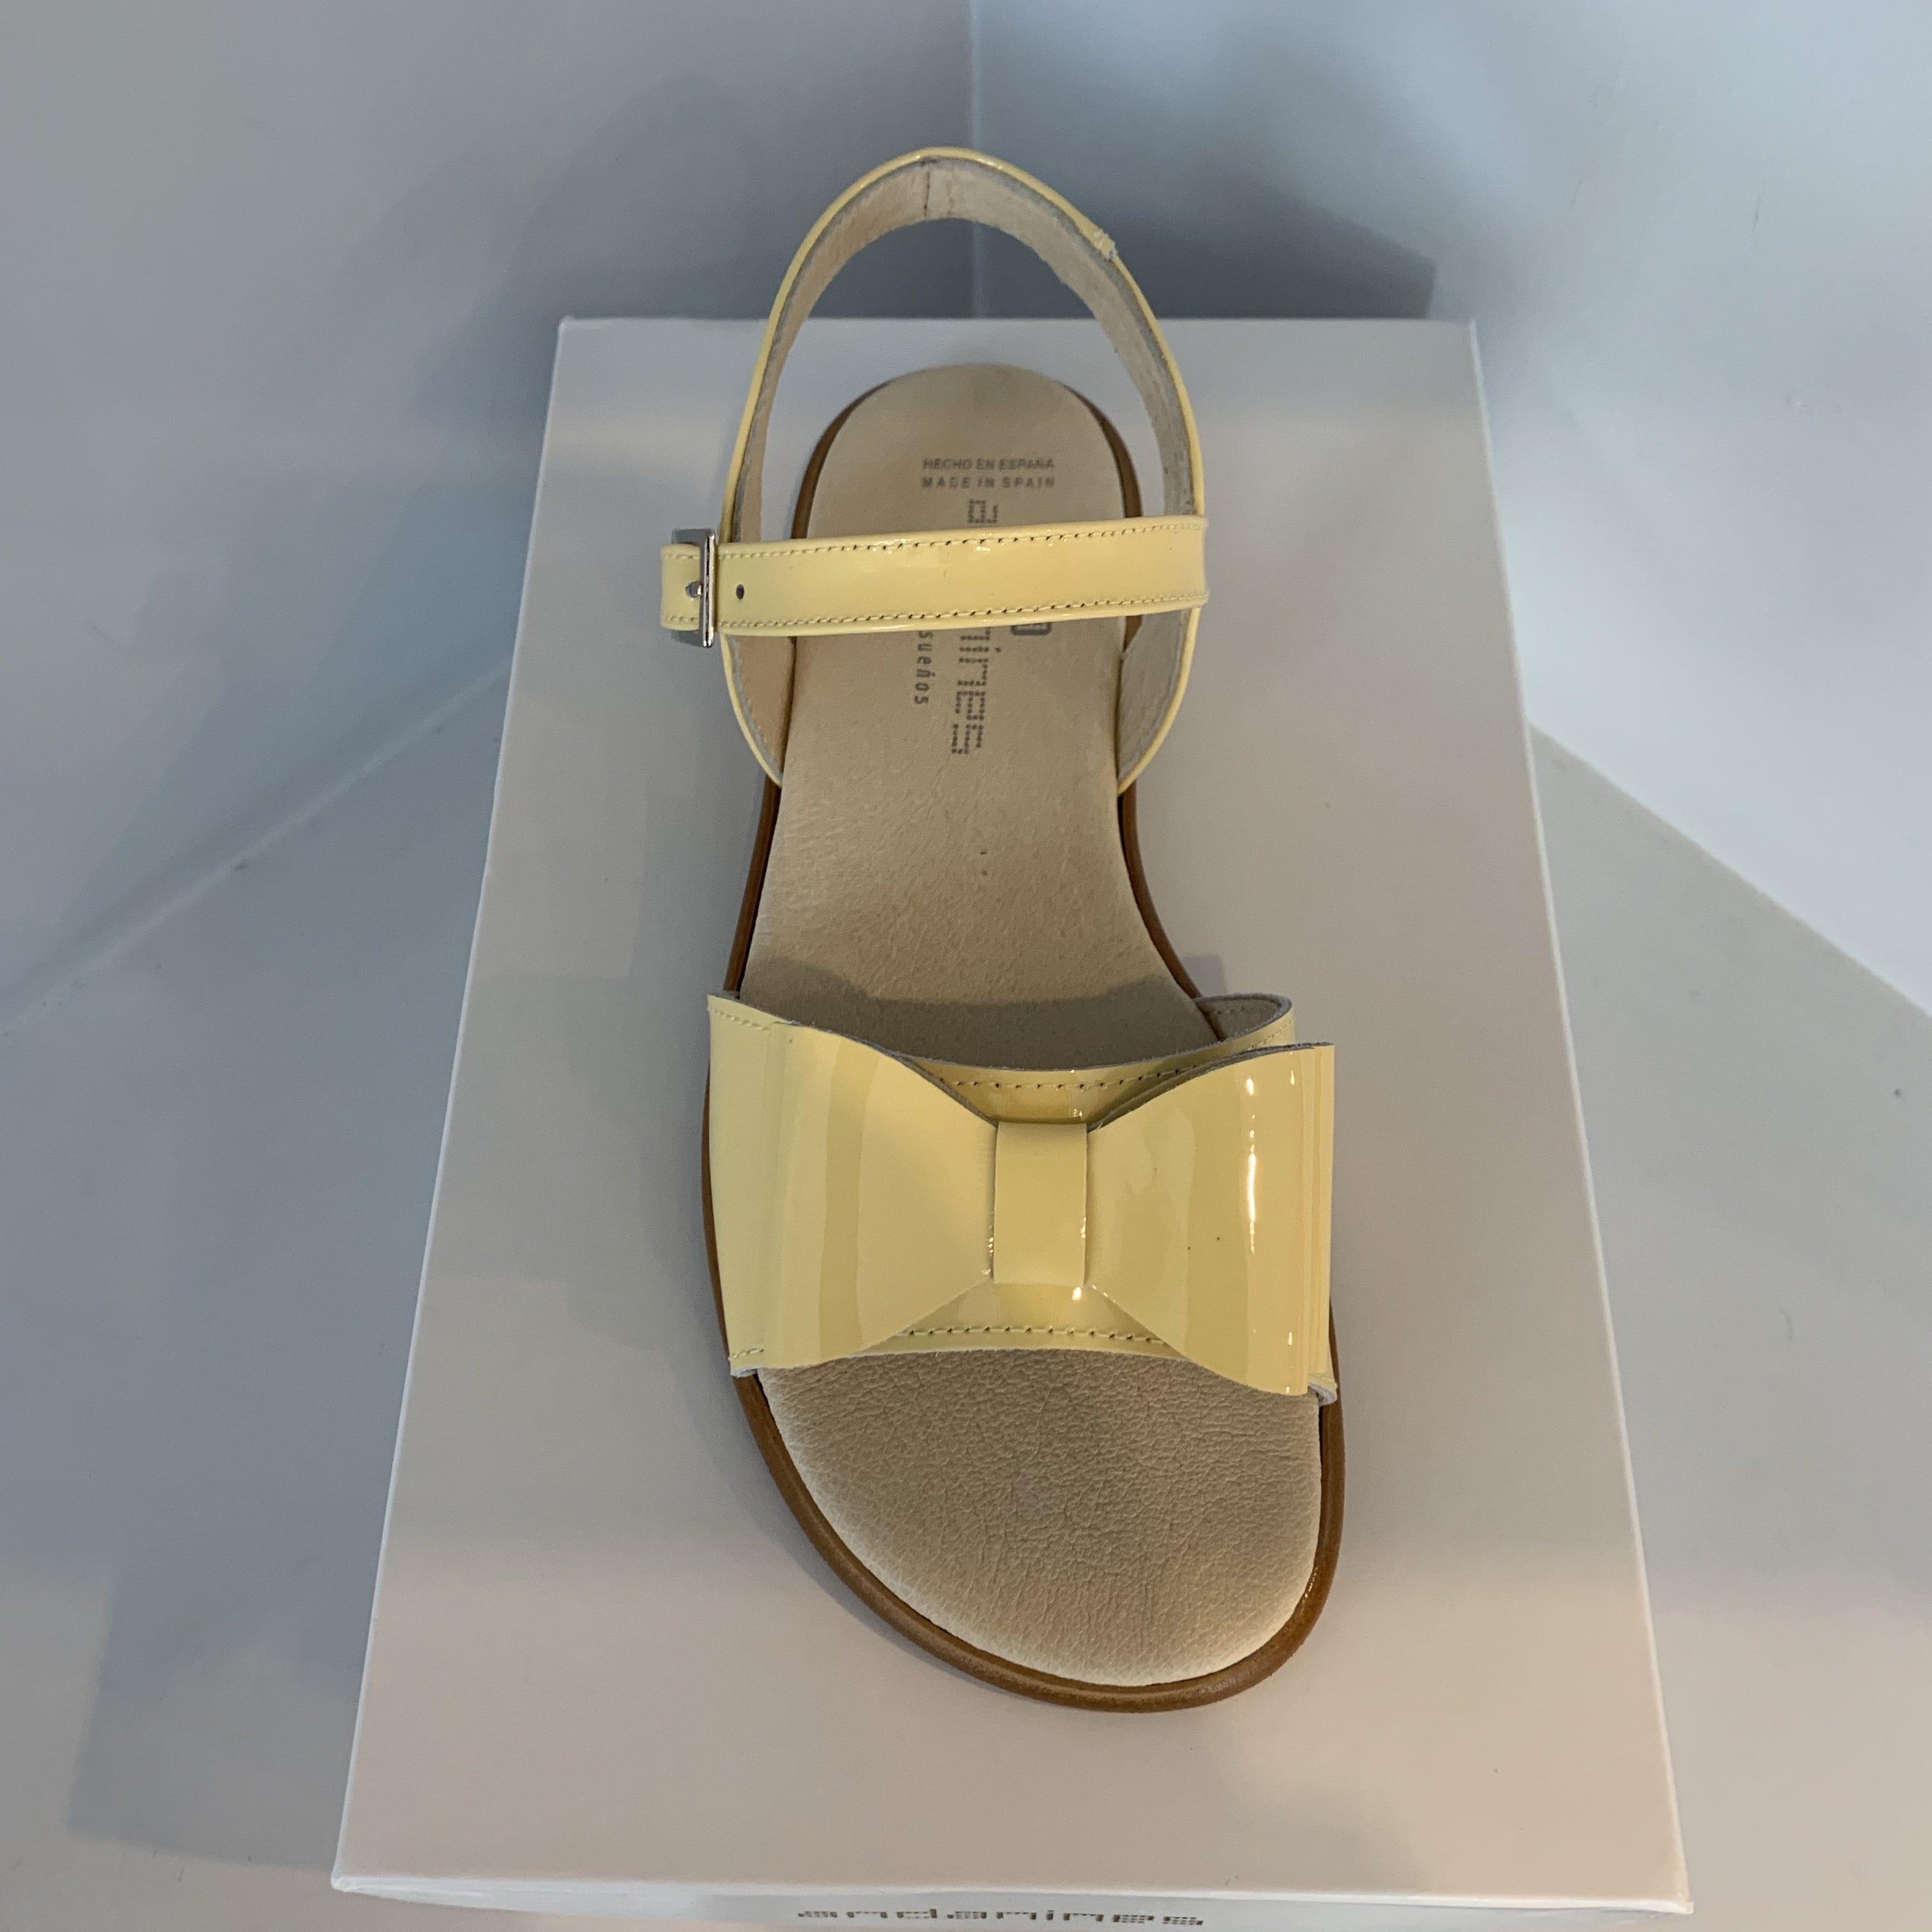 ANDANINES - Patent Leather Sandal Thin Strap - Lemon